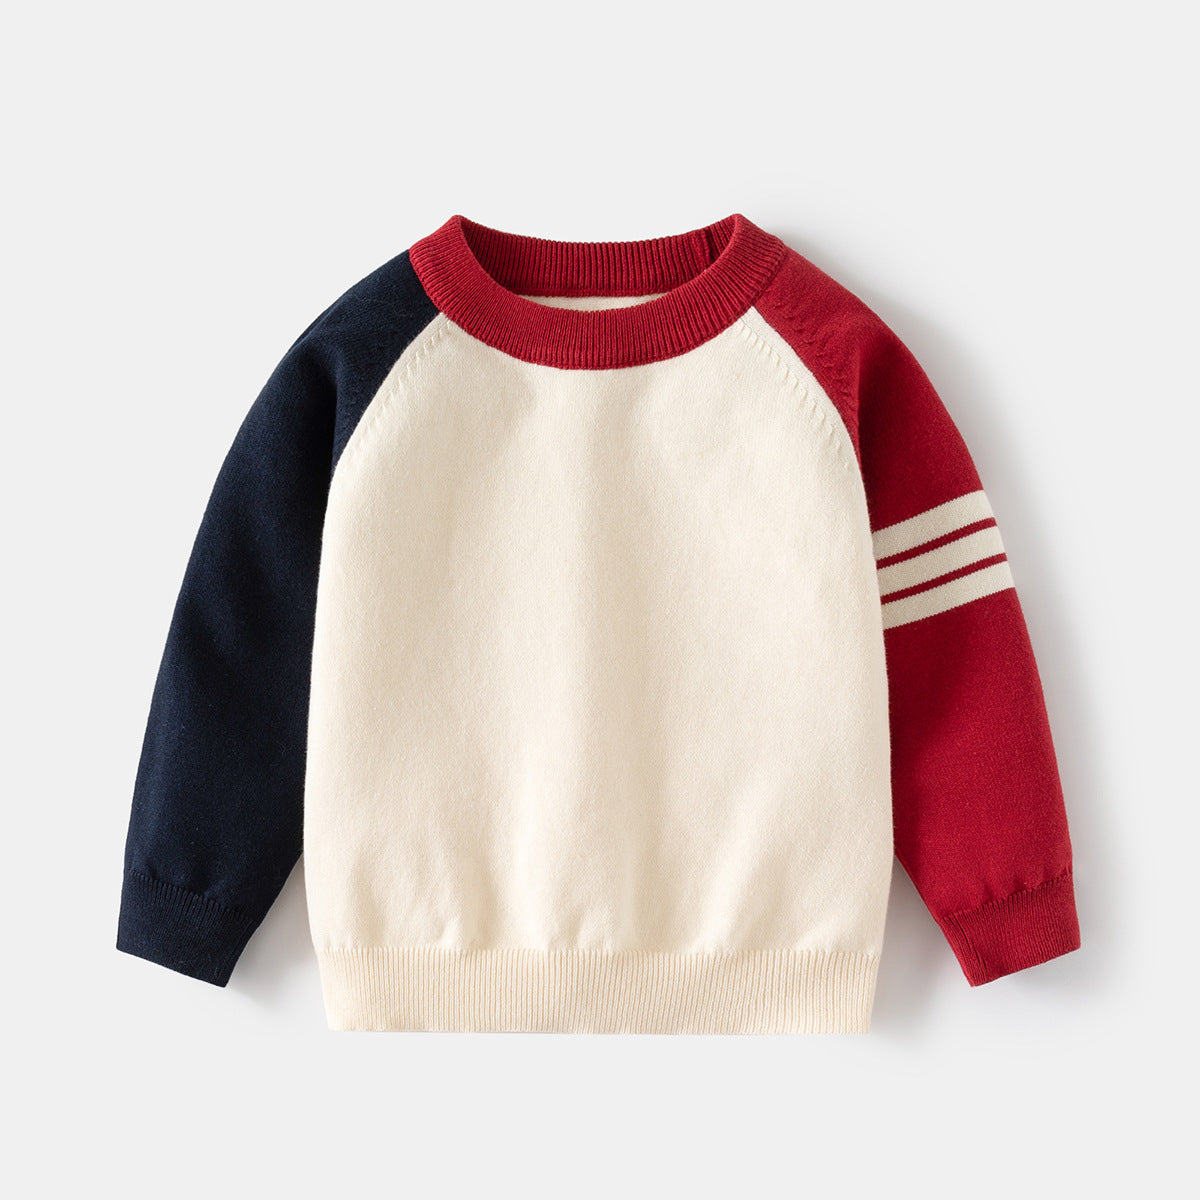 [5131071] - Baju Atasan Sweater Gradasi Fashion Import Anak Laki-Laki - Motif Hand Stripes